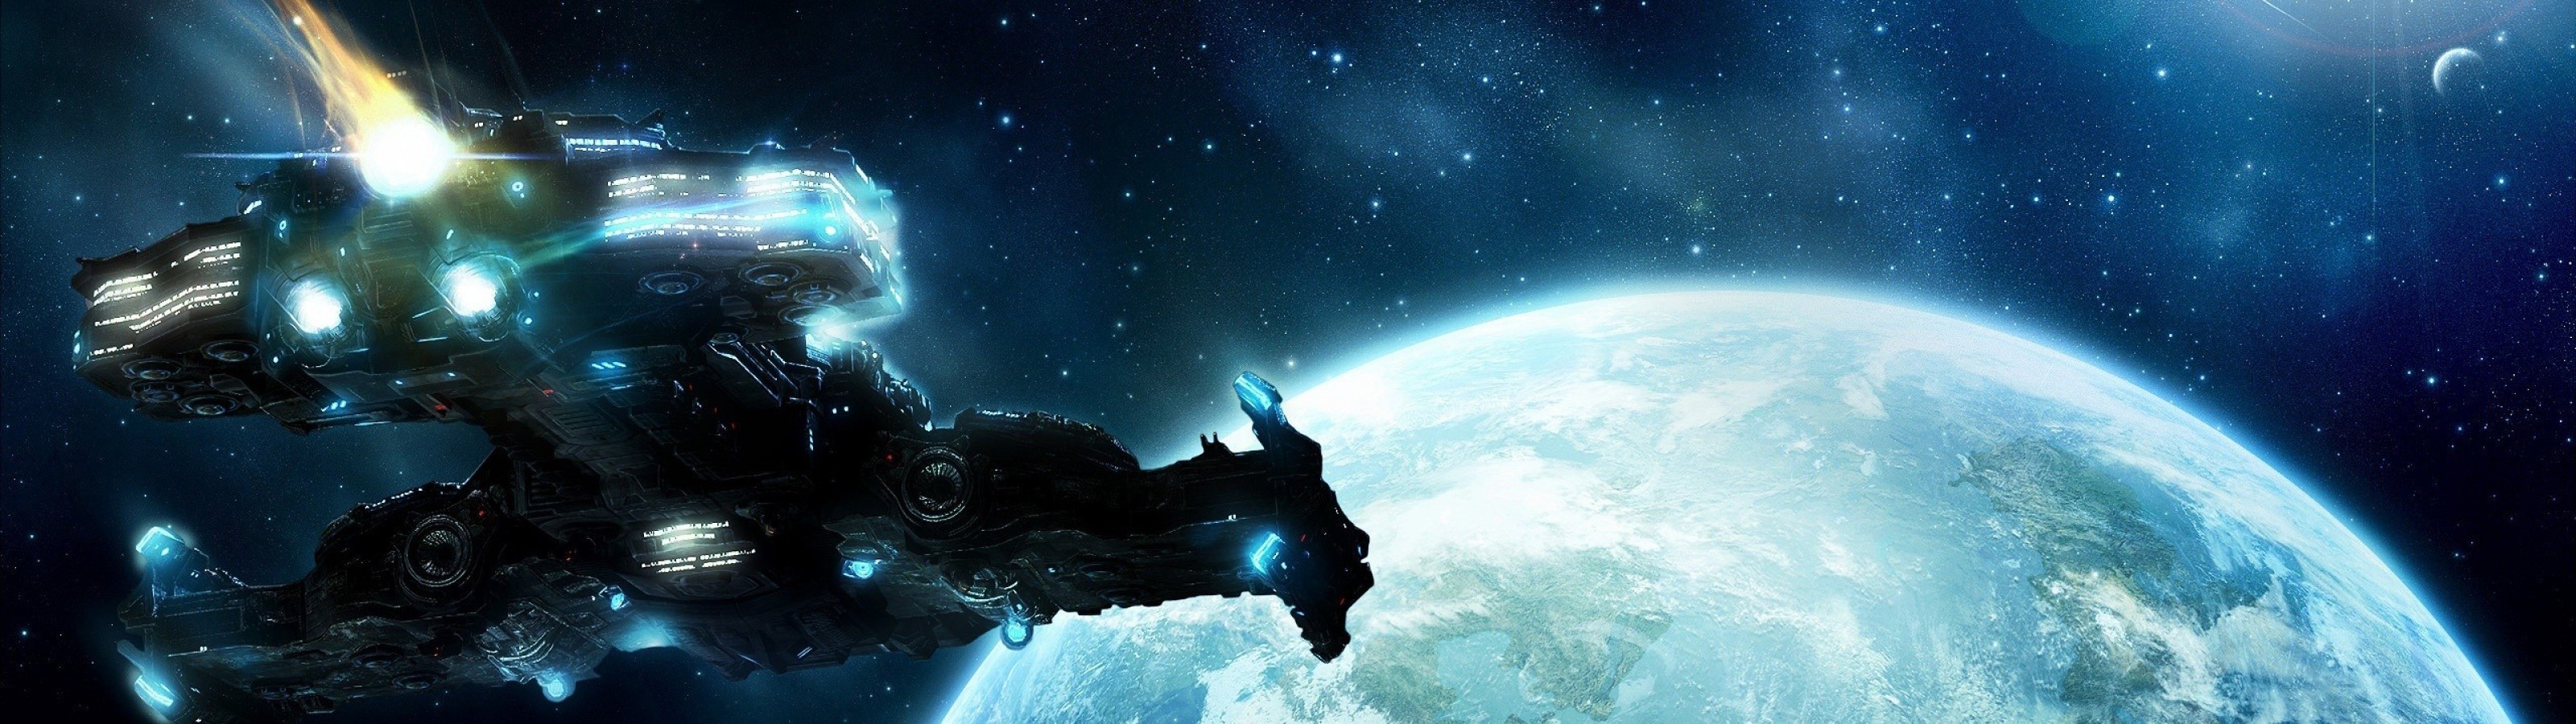 Starcraft II, Spaceship Wallpaper